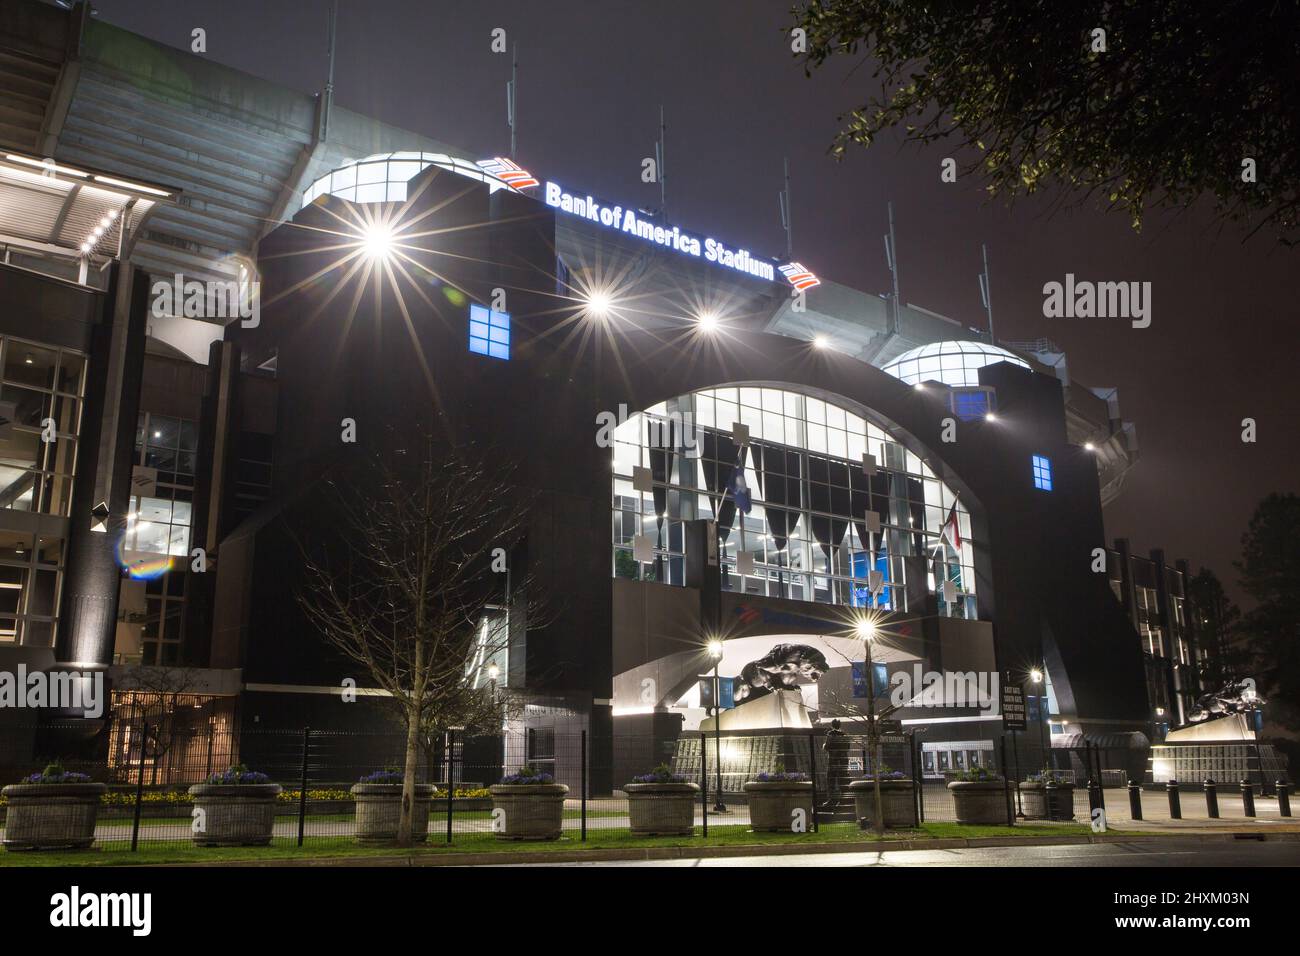 Vista notturna del Bank of America Stadium di Charlotte, North Carolina, sede dei Carolina Panthers della National Football League e dei Major League Soccer's. Foto Stock